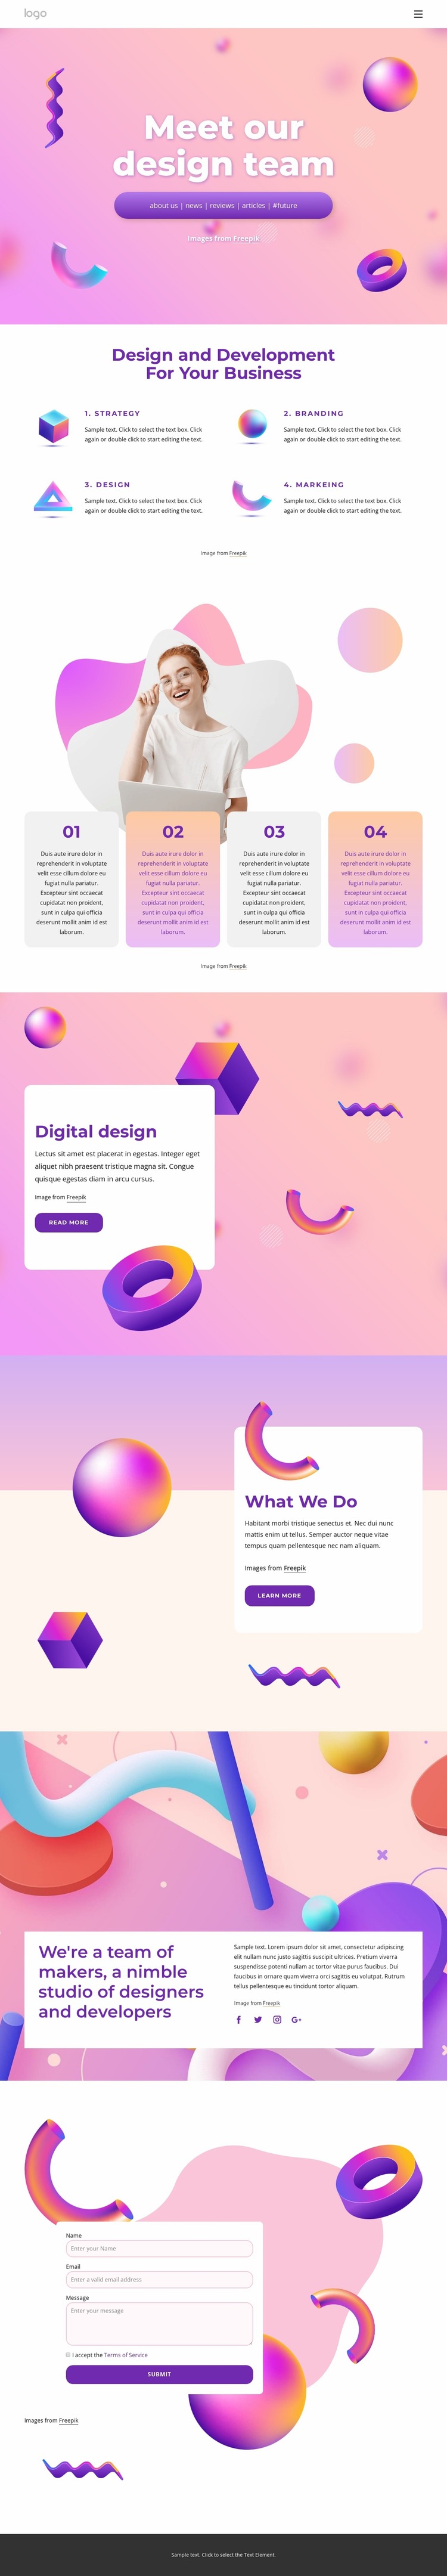 Web design and development company Website Mockup